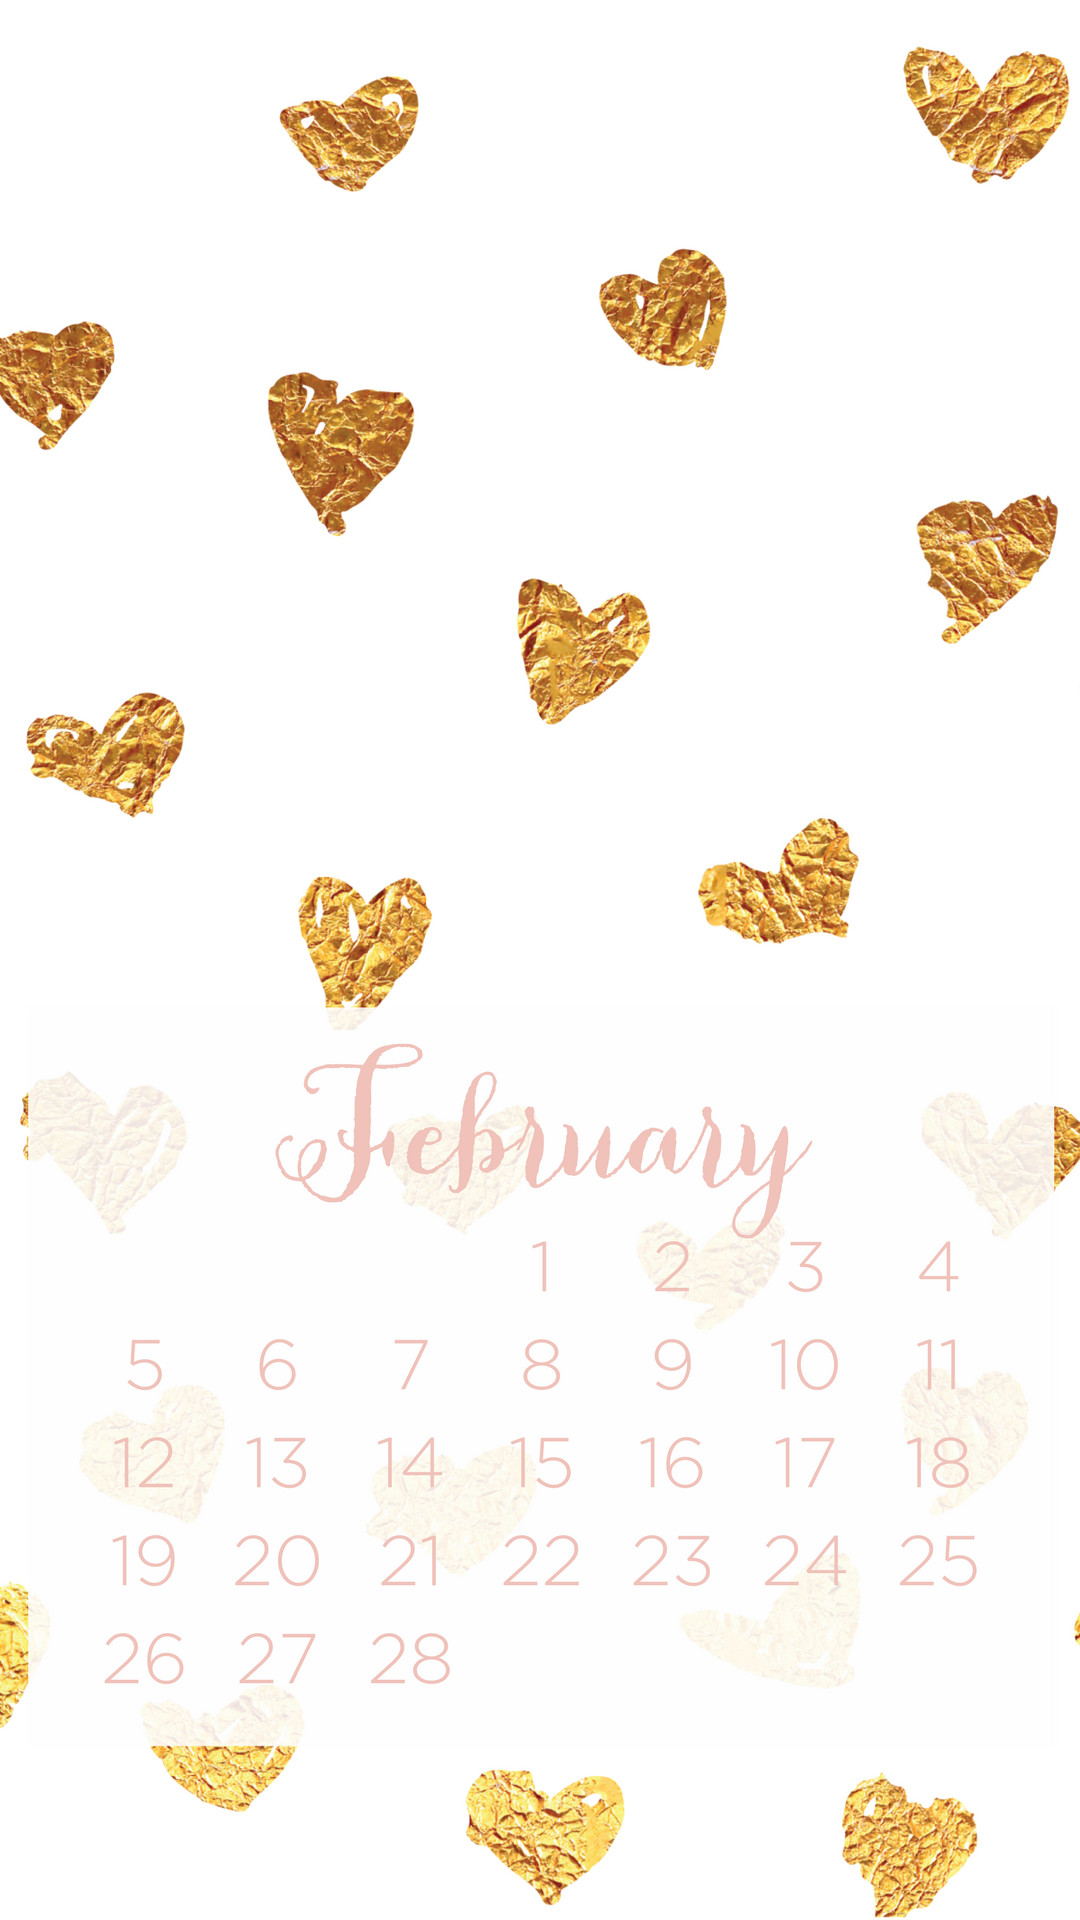 Click to download the foil heart February calendar wallpaper.